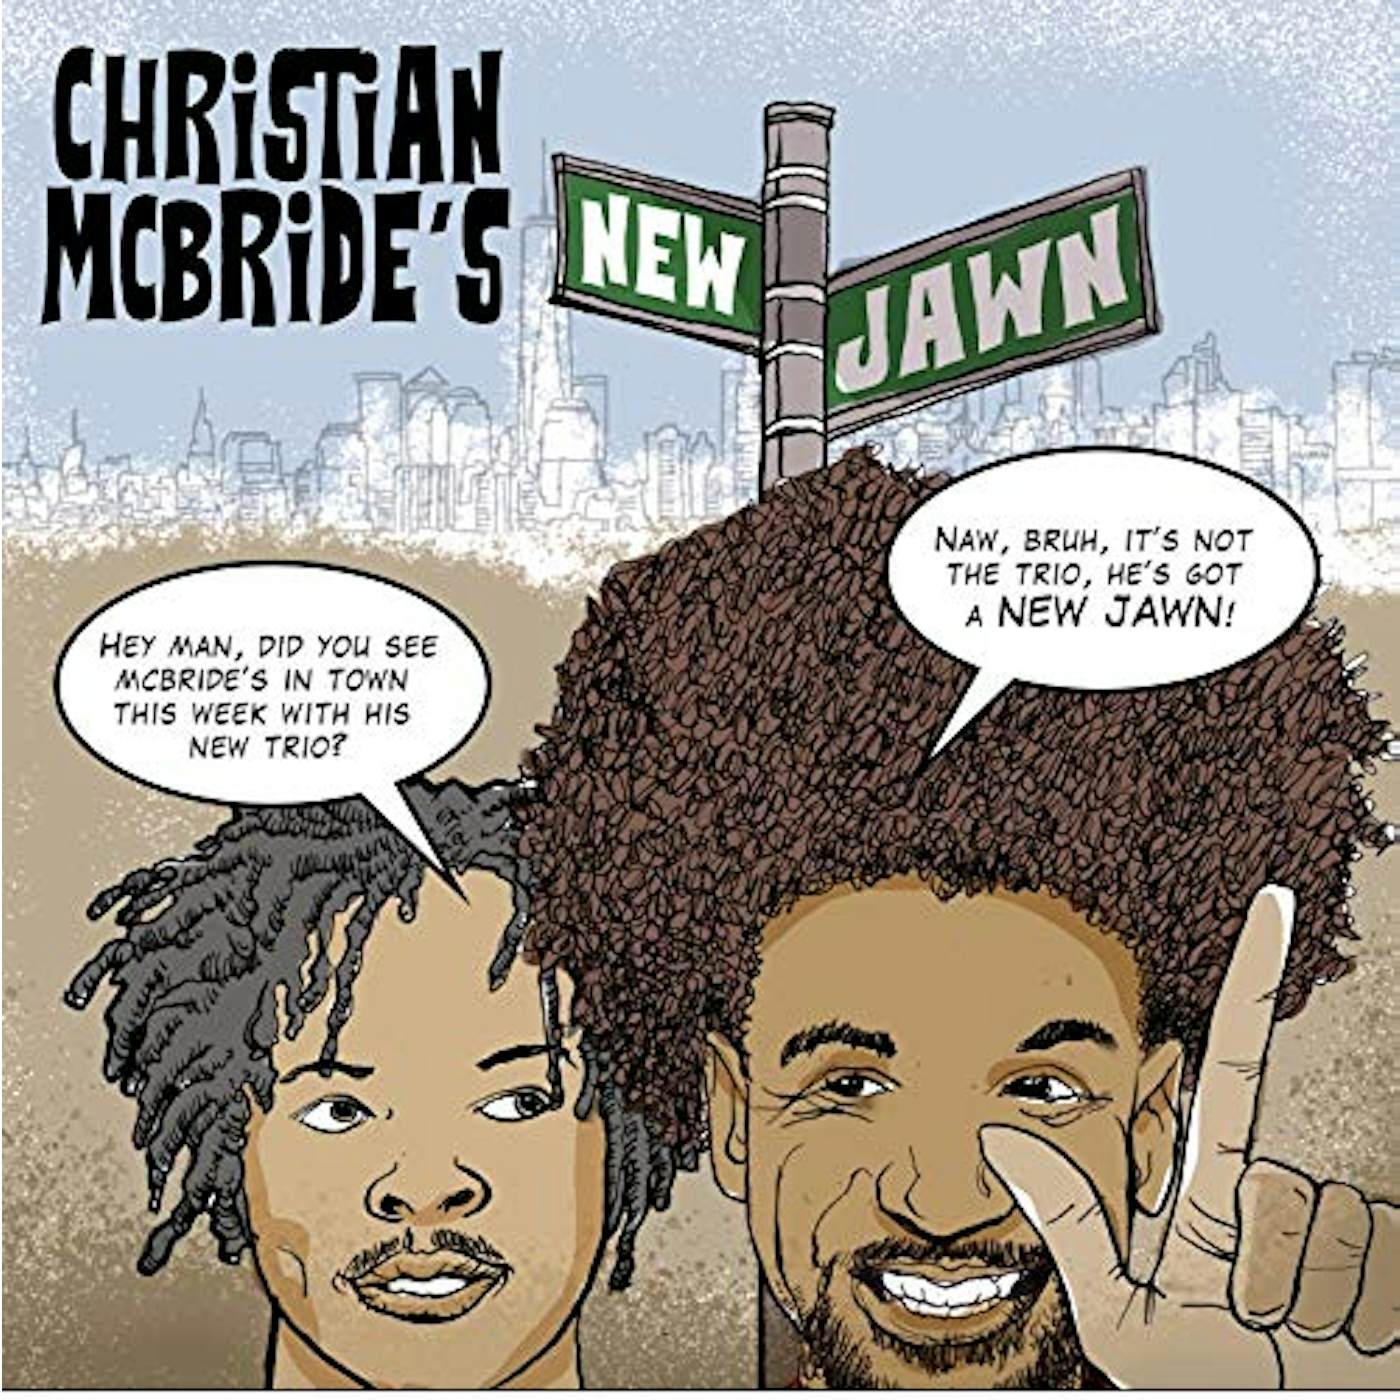 Christian McBride's New Jawn Vinyl Record